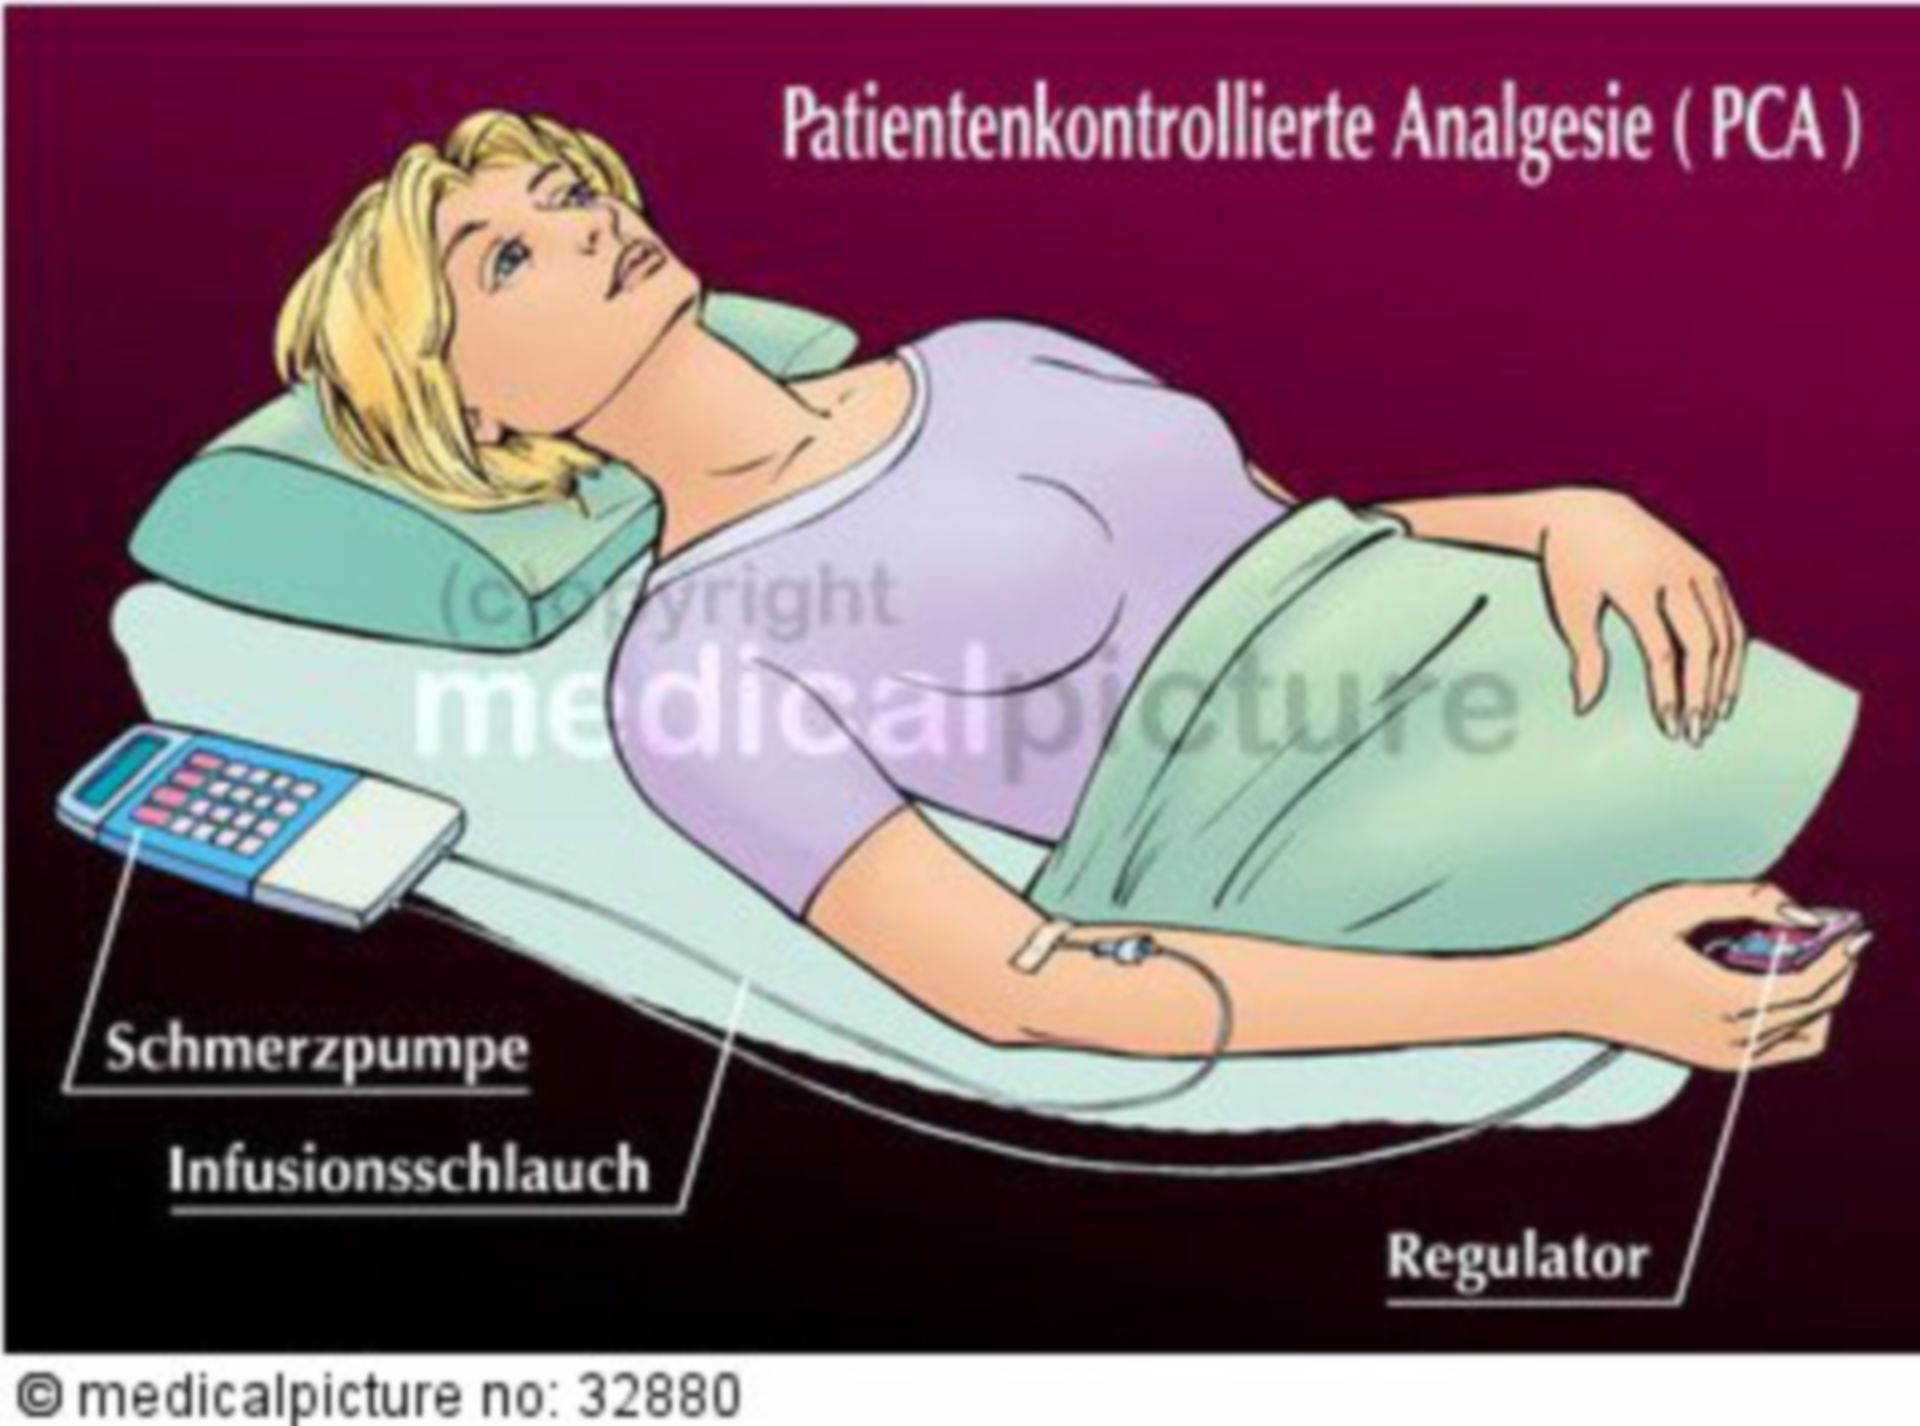  Patientenkontrollierte Analgesie (PCA) 
